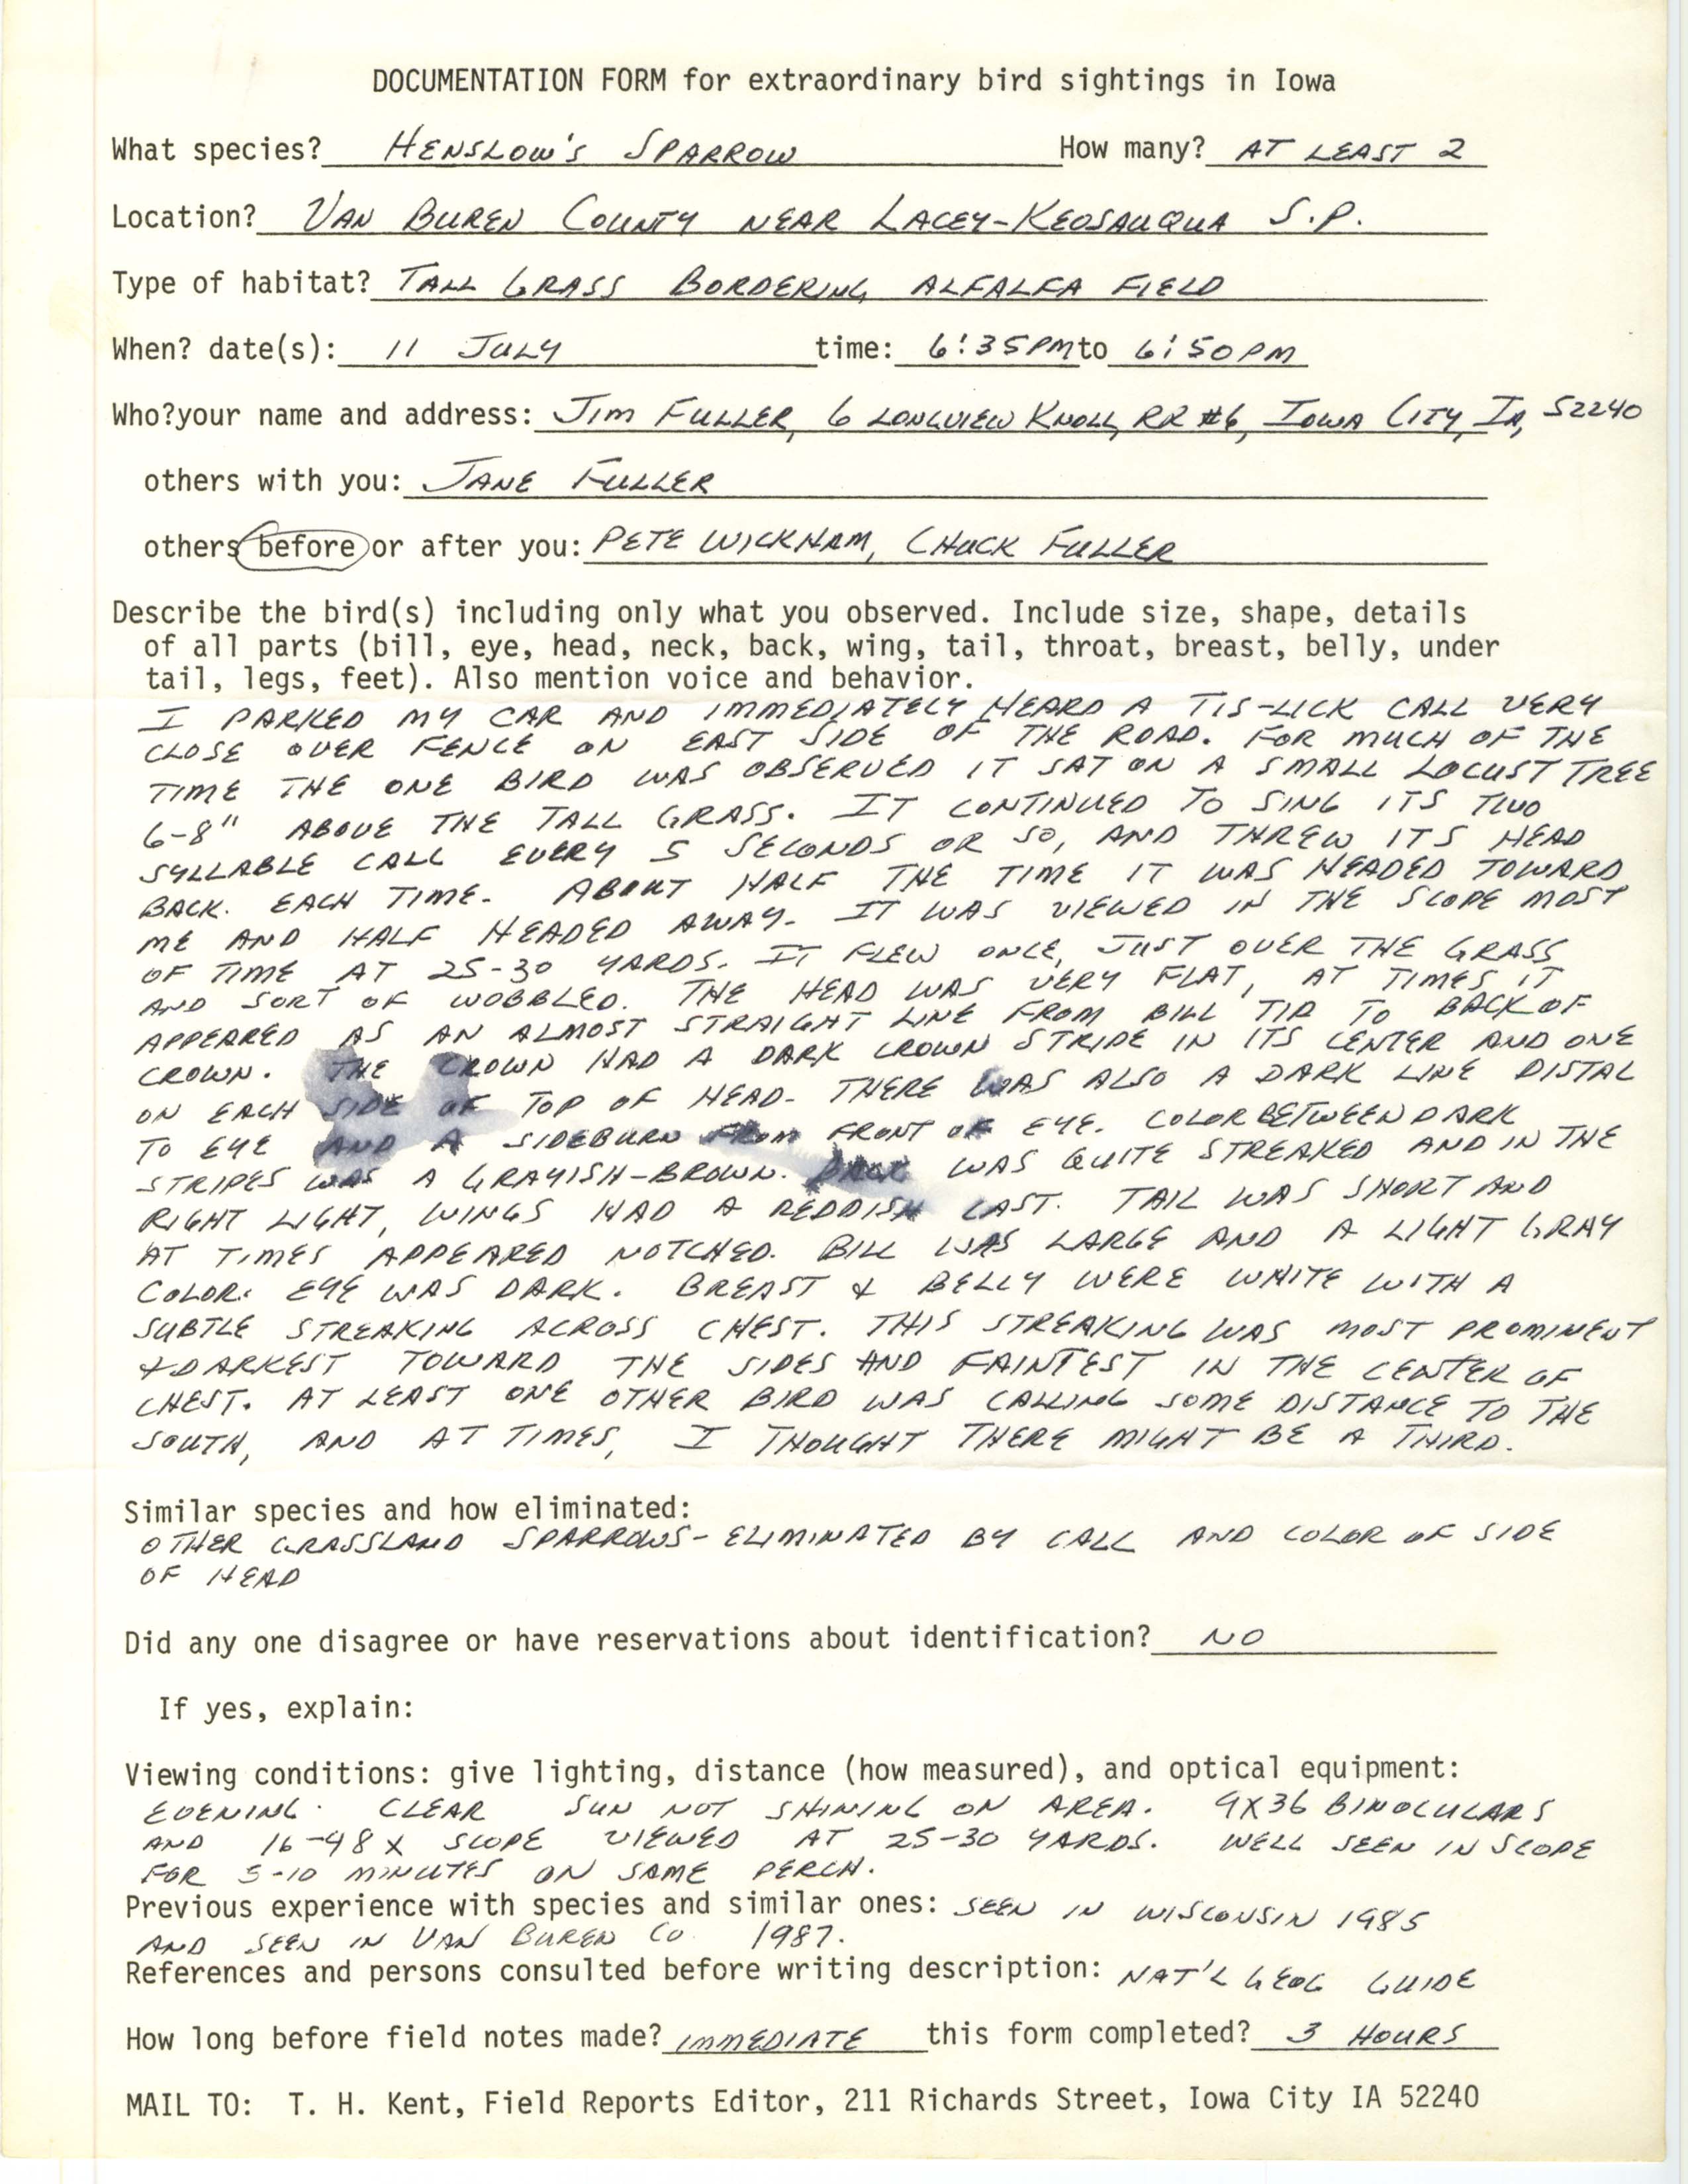 Rare bird documentation form for Henslow's Sparrow near Lacey-Keosauqua State Park, 1988